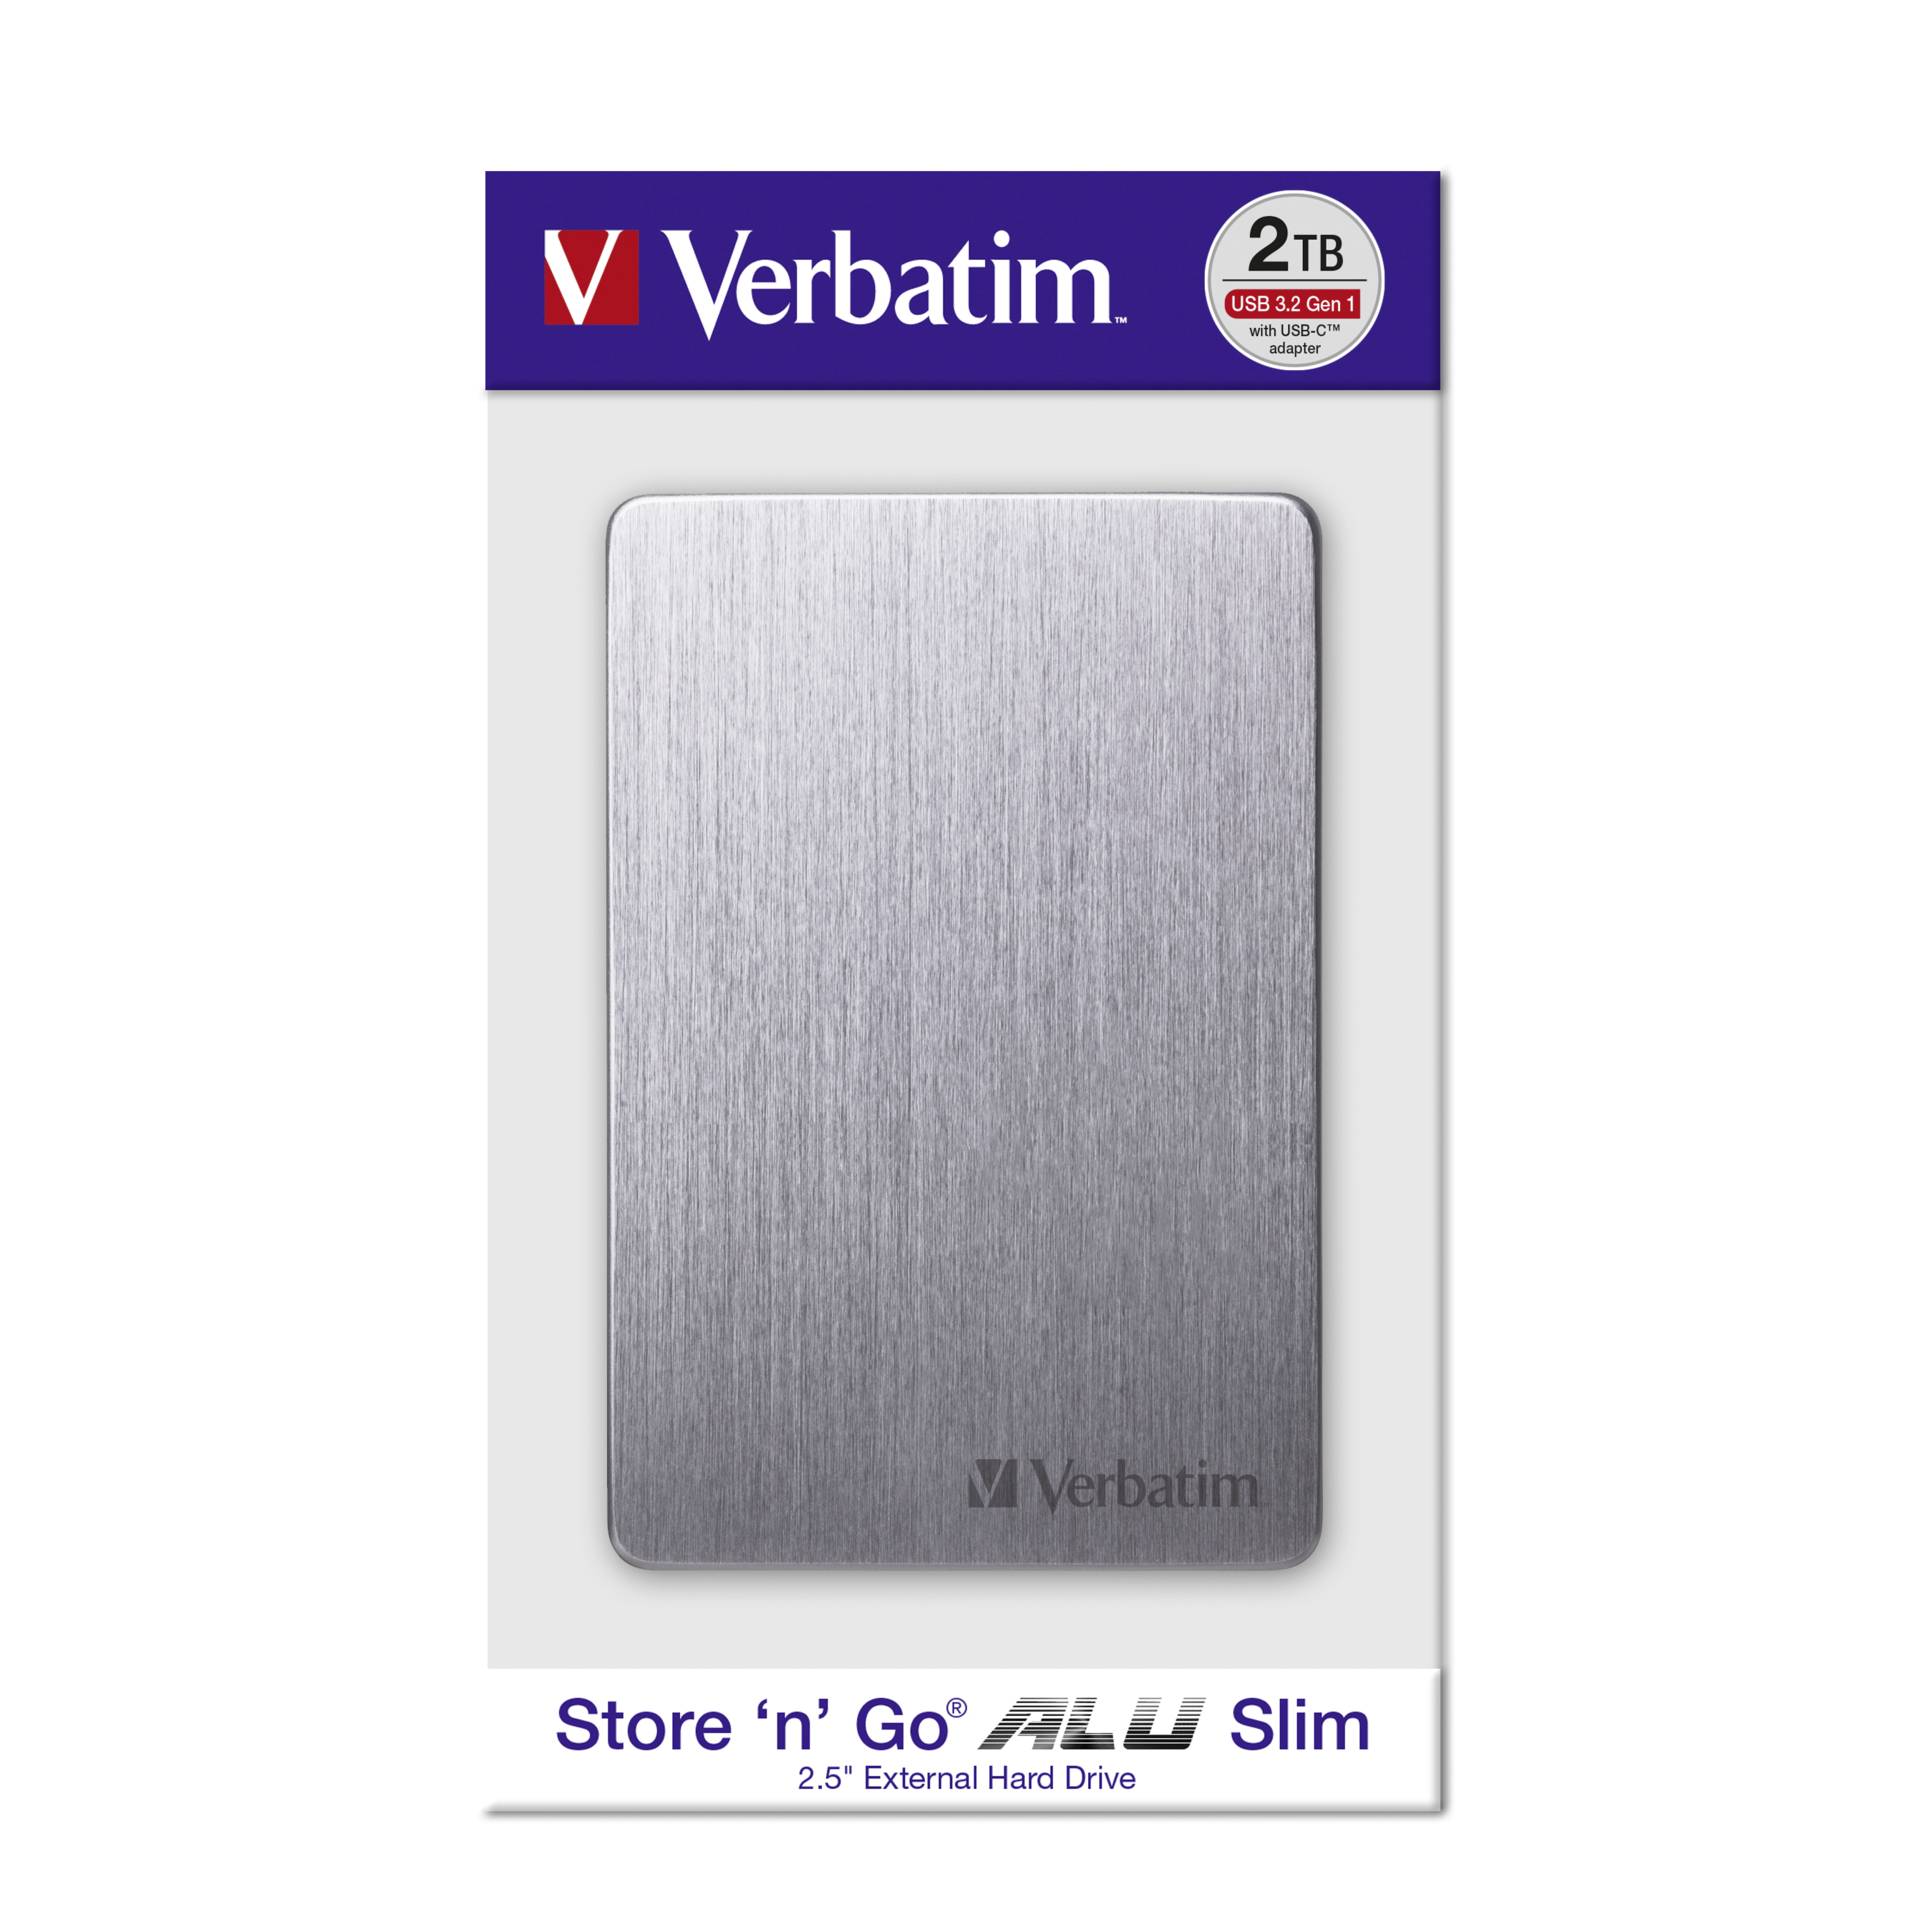 Verbatim Store n Go ALU Slim Portable Festplatte 2 TB Spacegrau